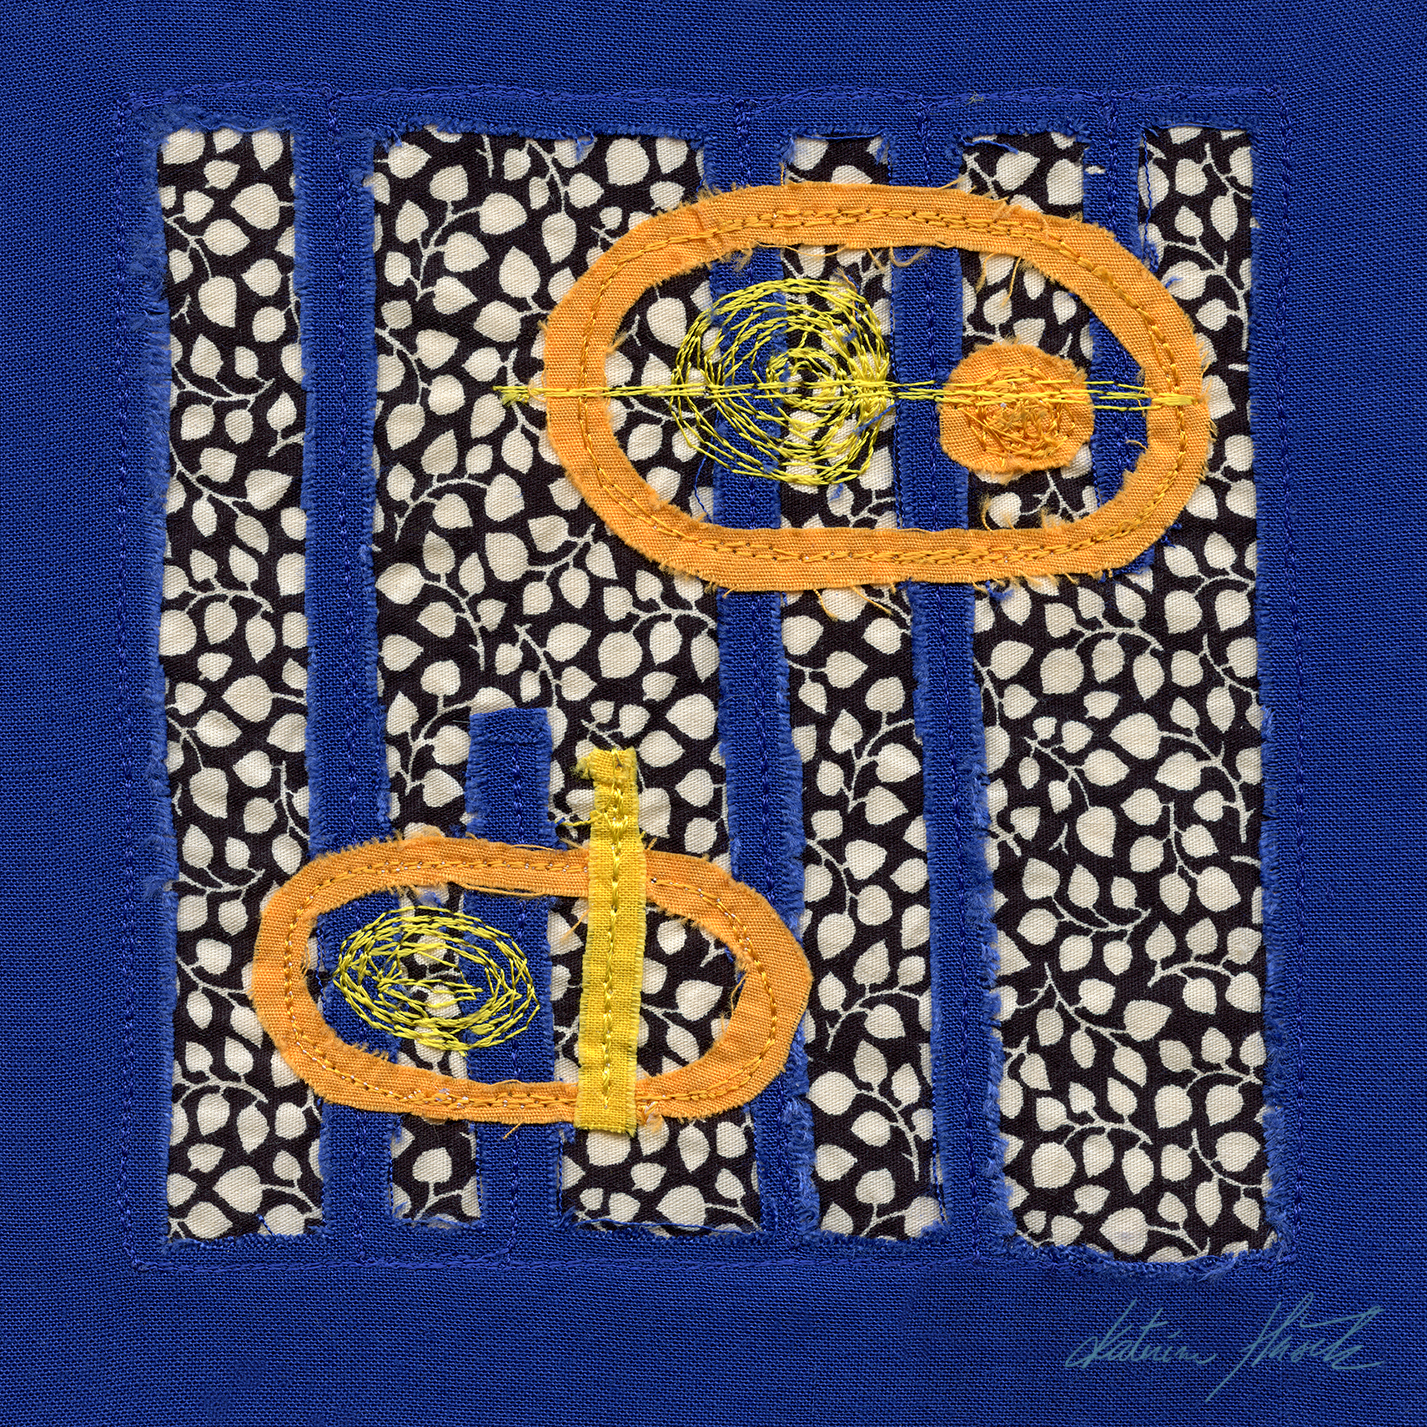 A textile artwork titled Dvorak's Minuet created by Katerina Hasek.